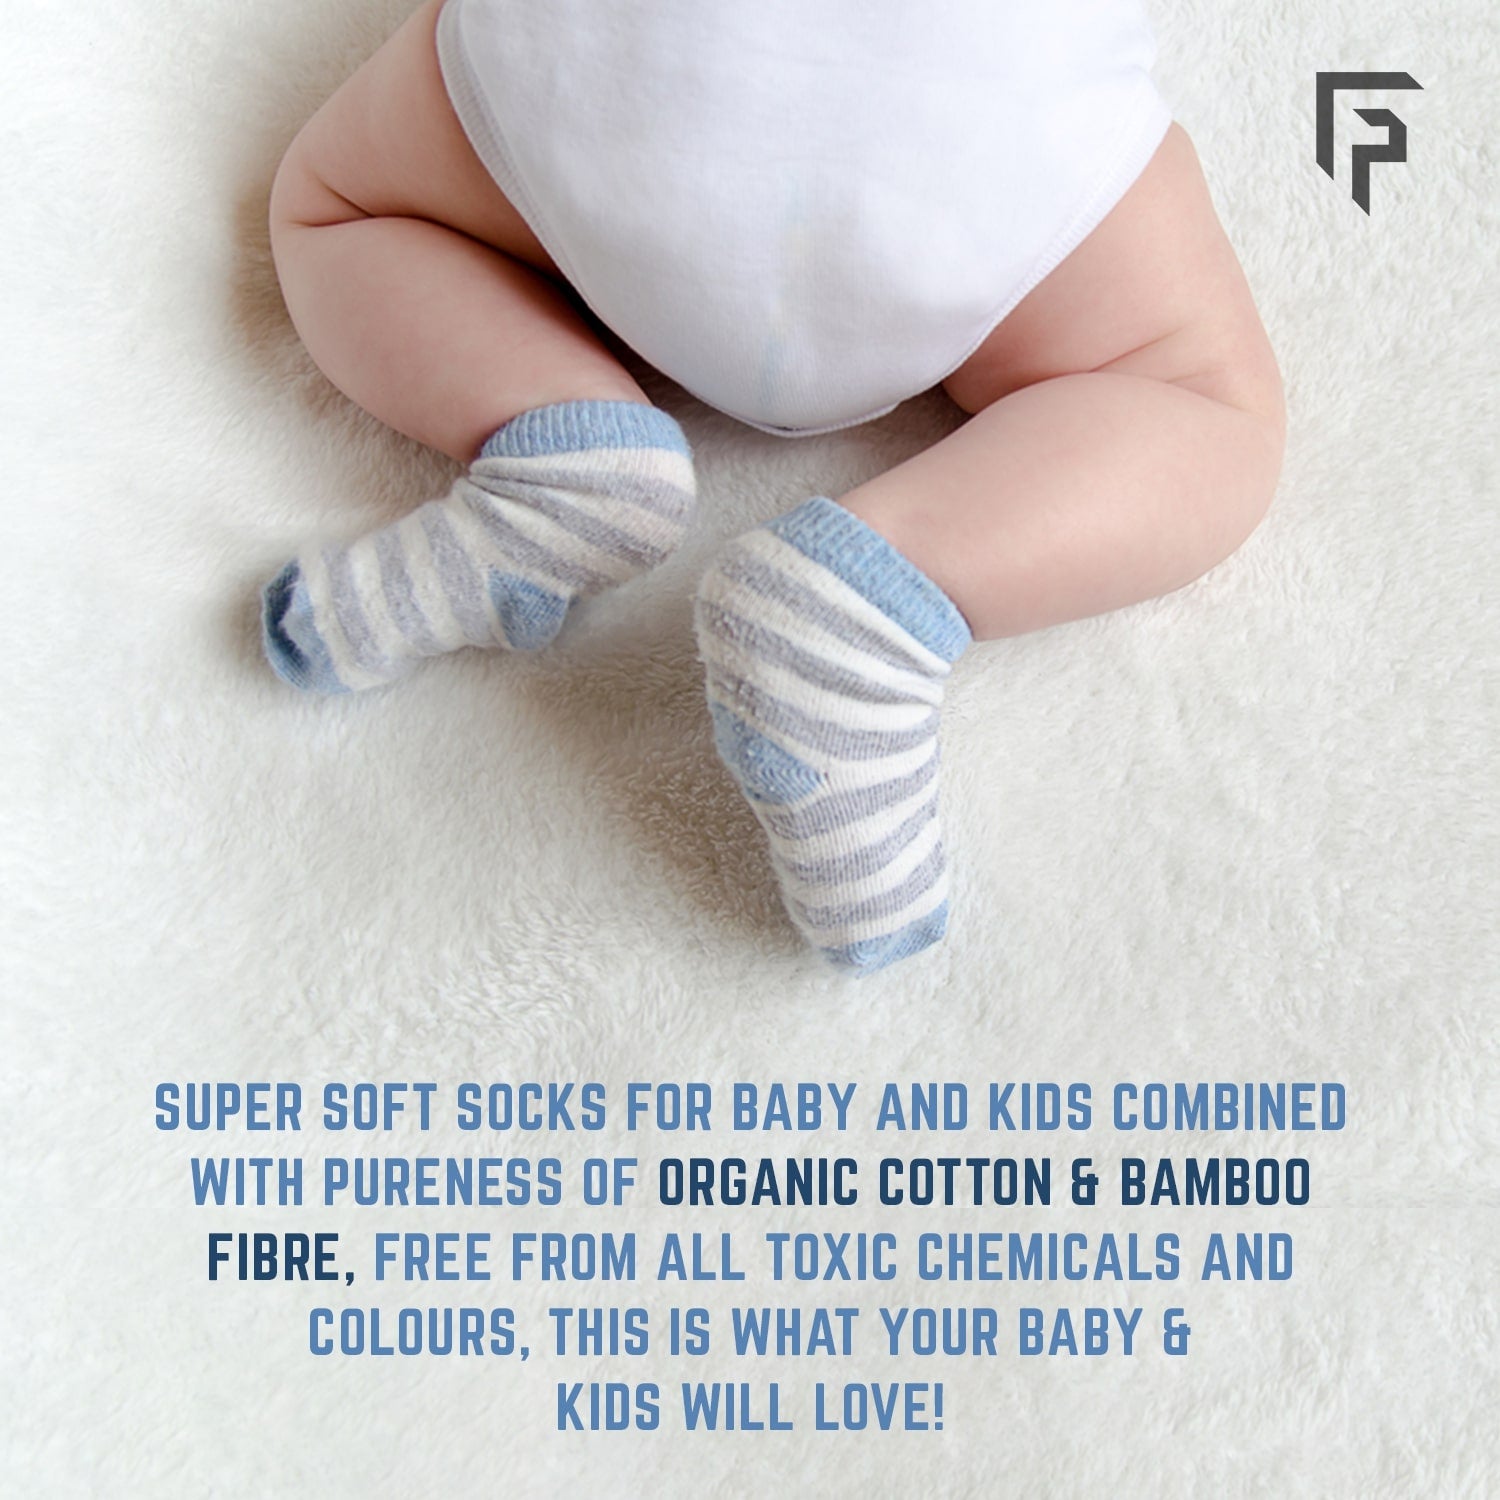 FOOTPRINTS Organic cotton Baby Boy Girls Kids Socks-12-30 Months - Pack of 8 Pairs -P3 Stripes &amp; P5 Blue